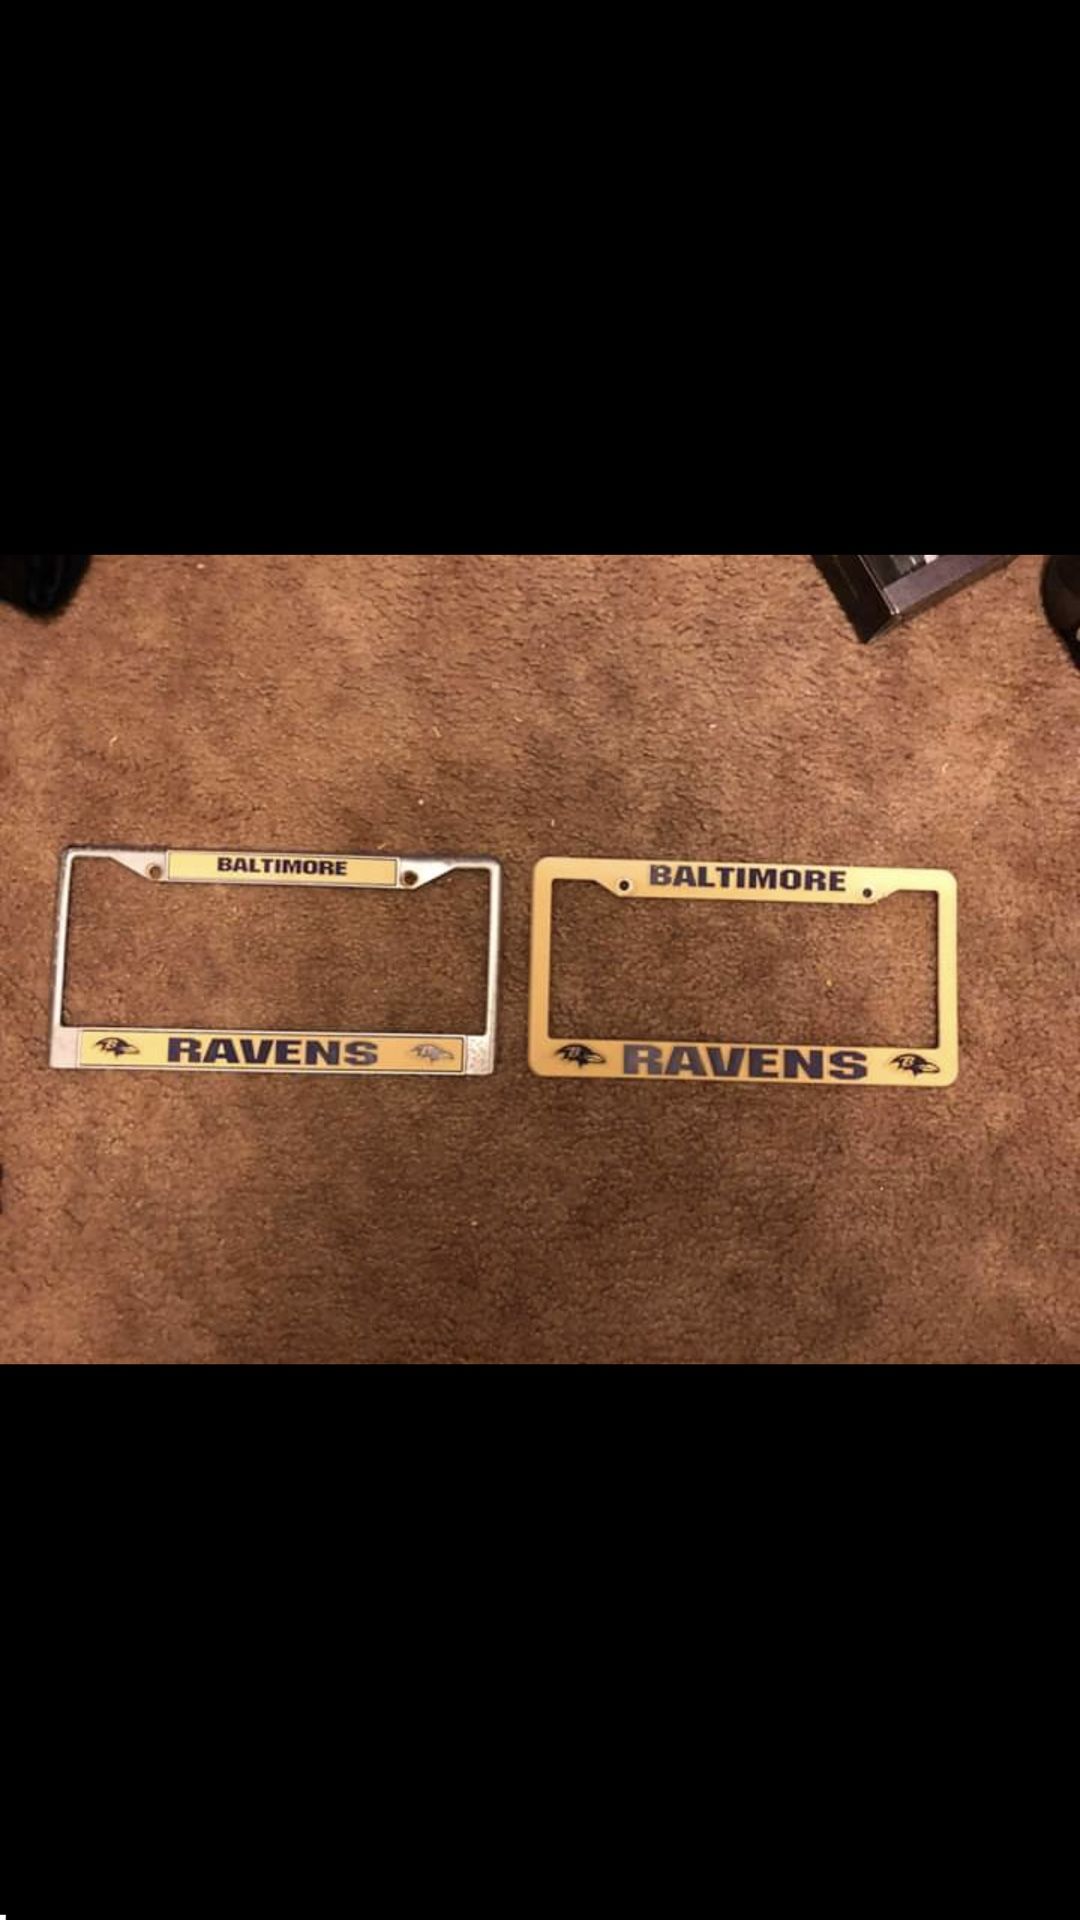 Ravens license plates